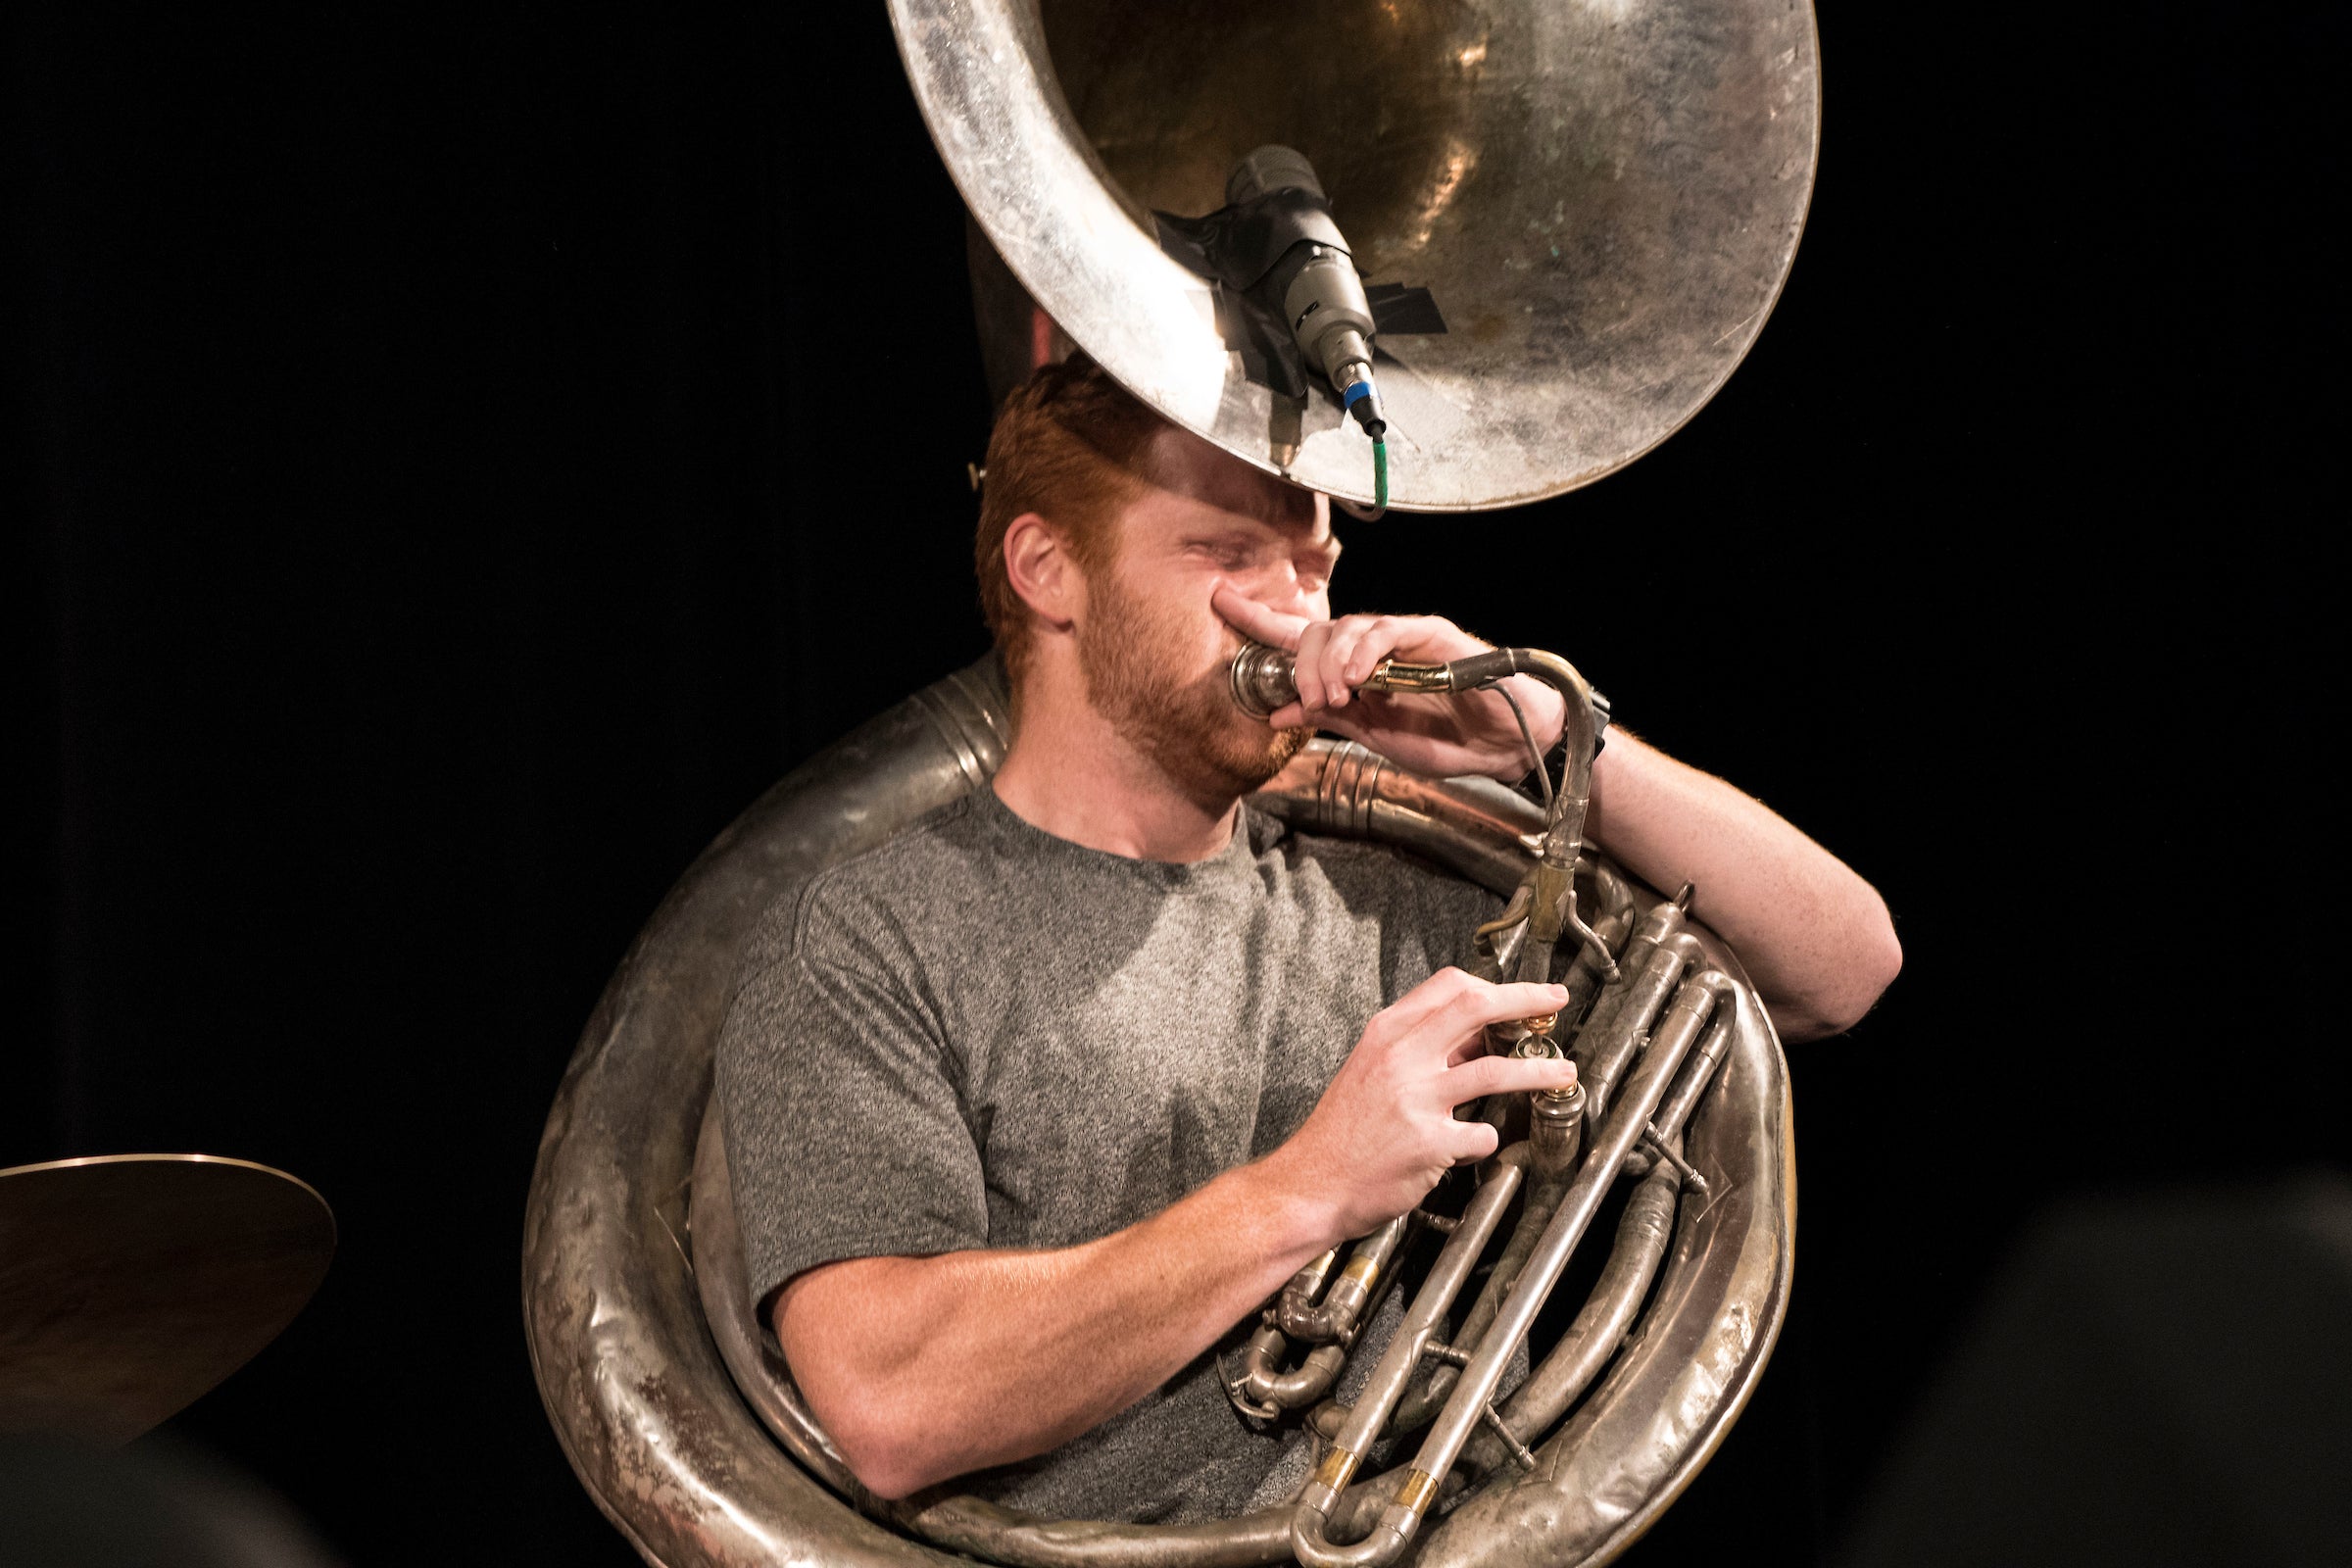 Man plays the trombone